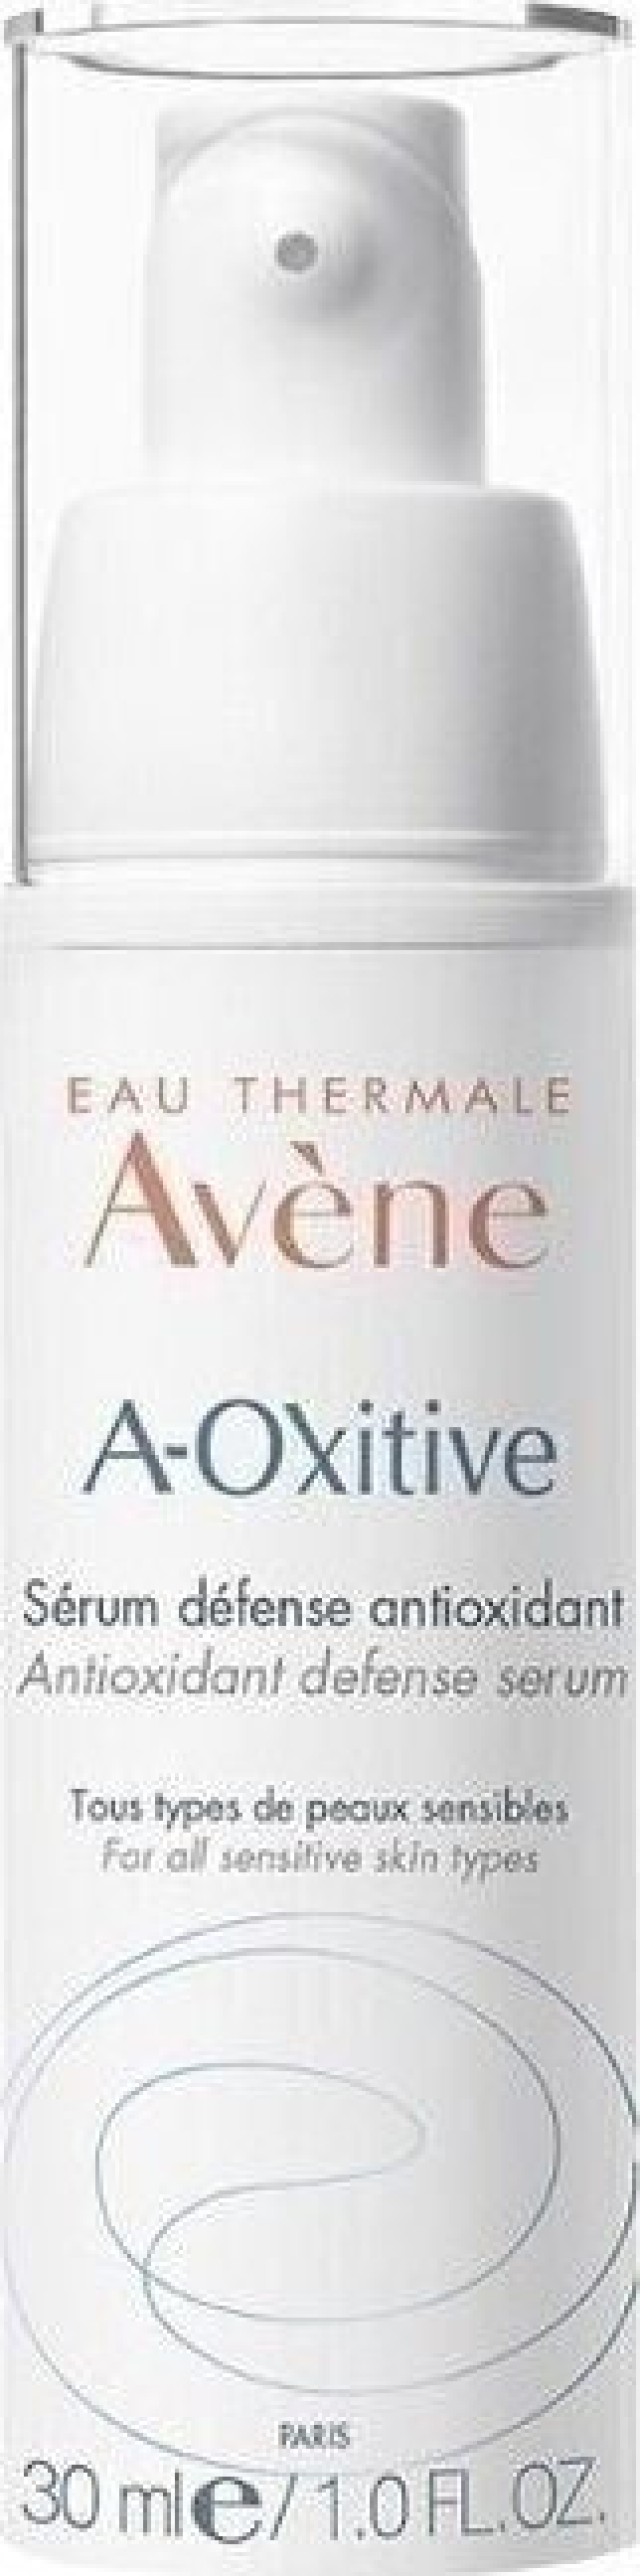 Avene A-Oxitive Αntioxidant Defense Serum 30ml Αντι-οξειδωτικός Ορός Άμυνας